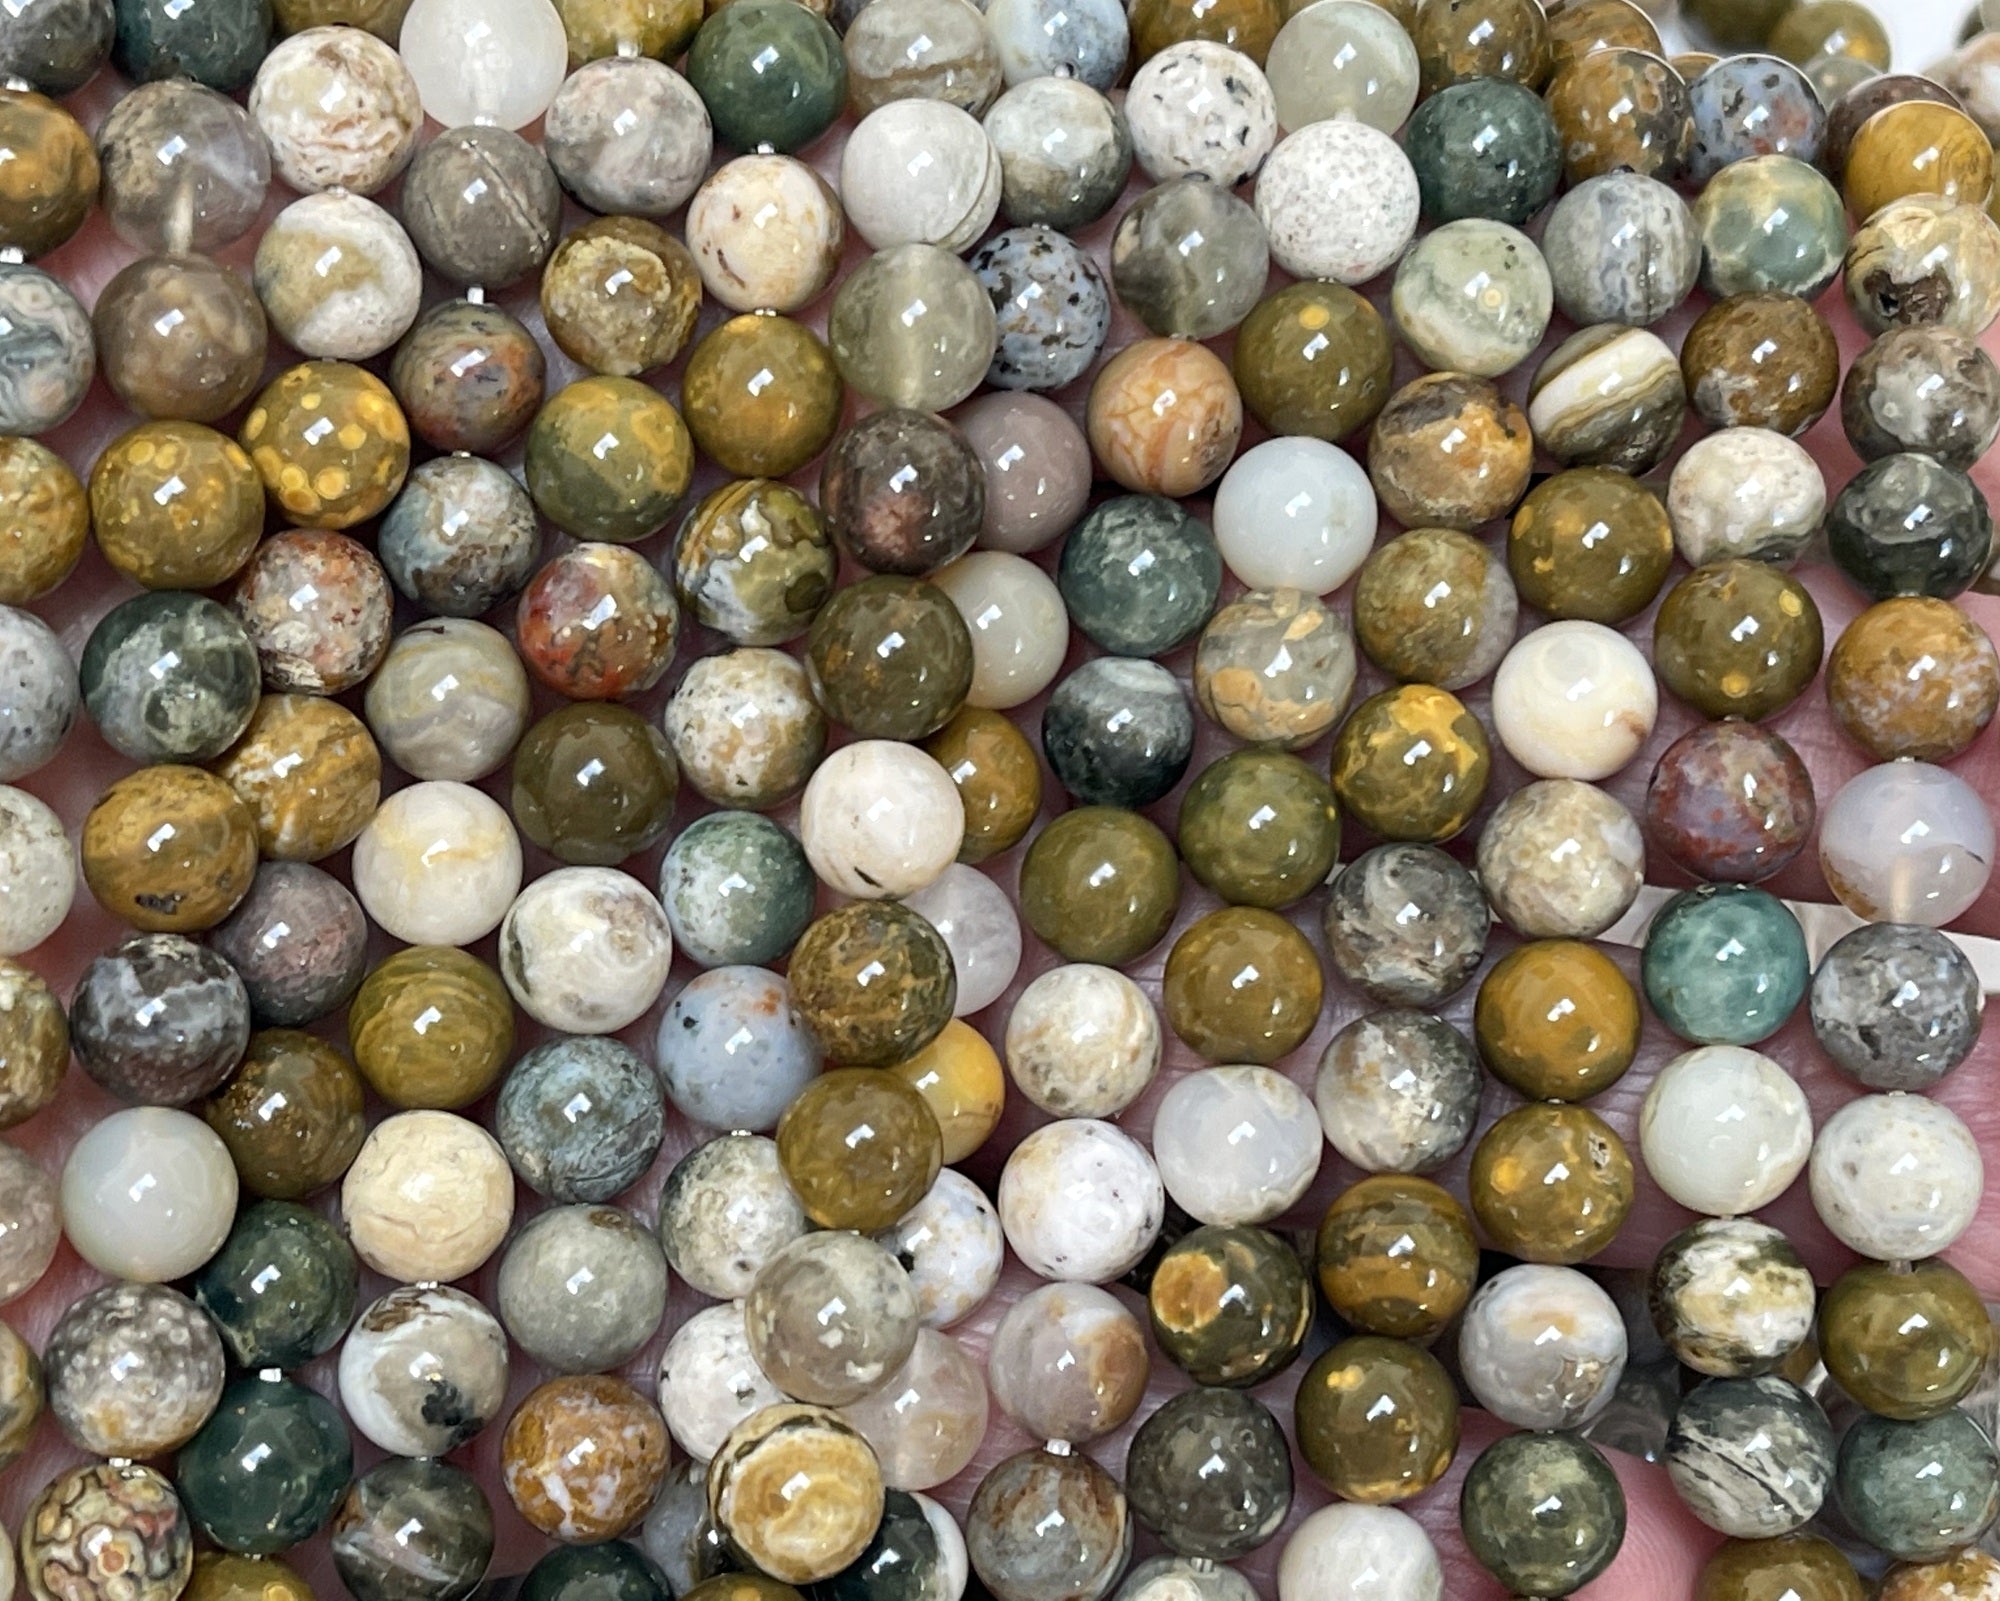 Madagascar Ocean Jasper 8mm round natural gemstone beads 15.5" strand - Oz Beads 